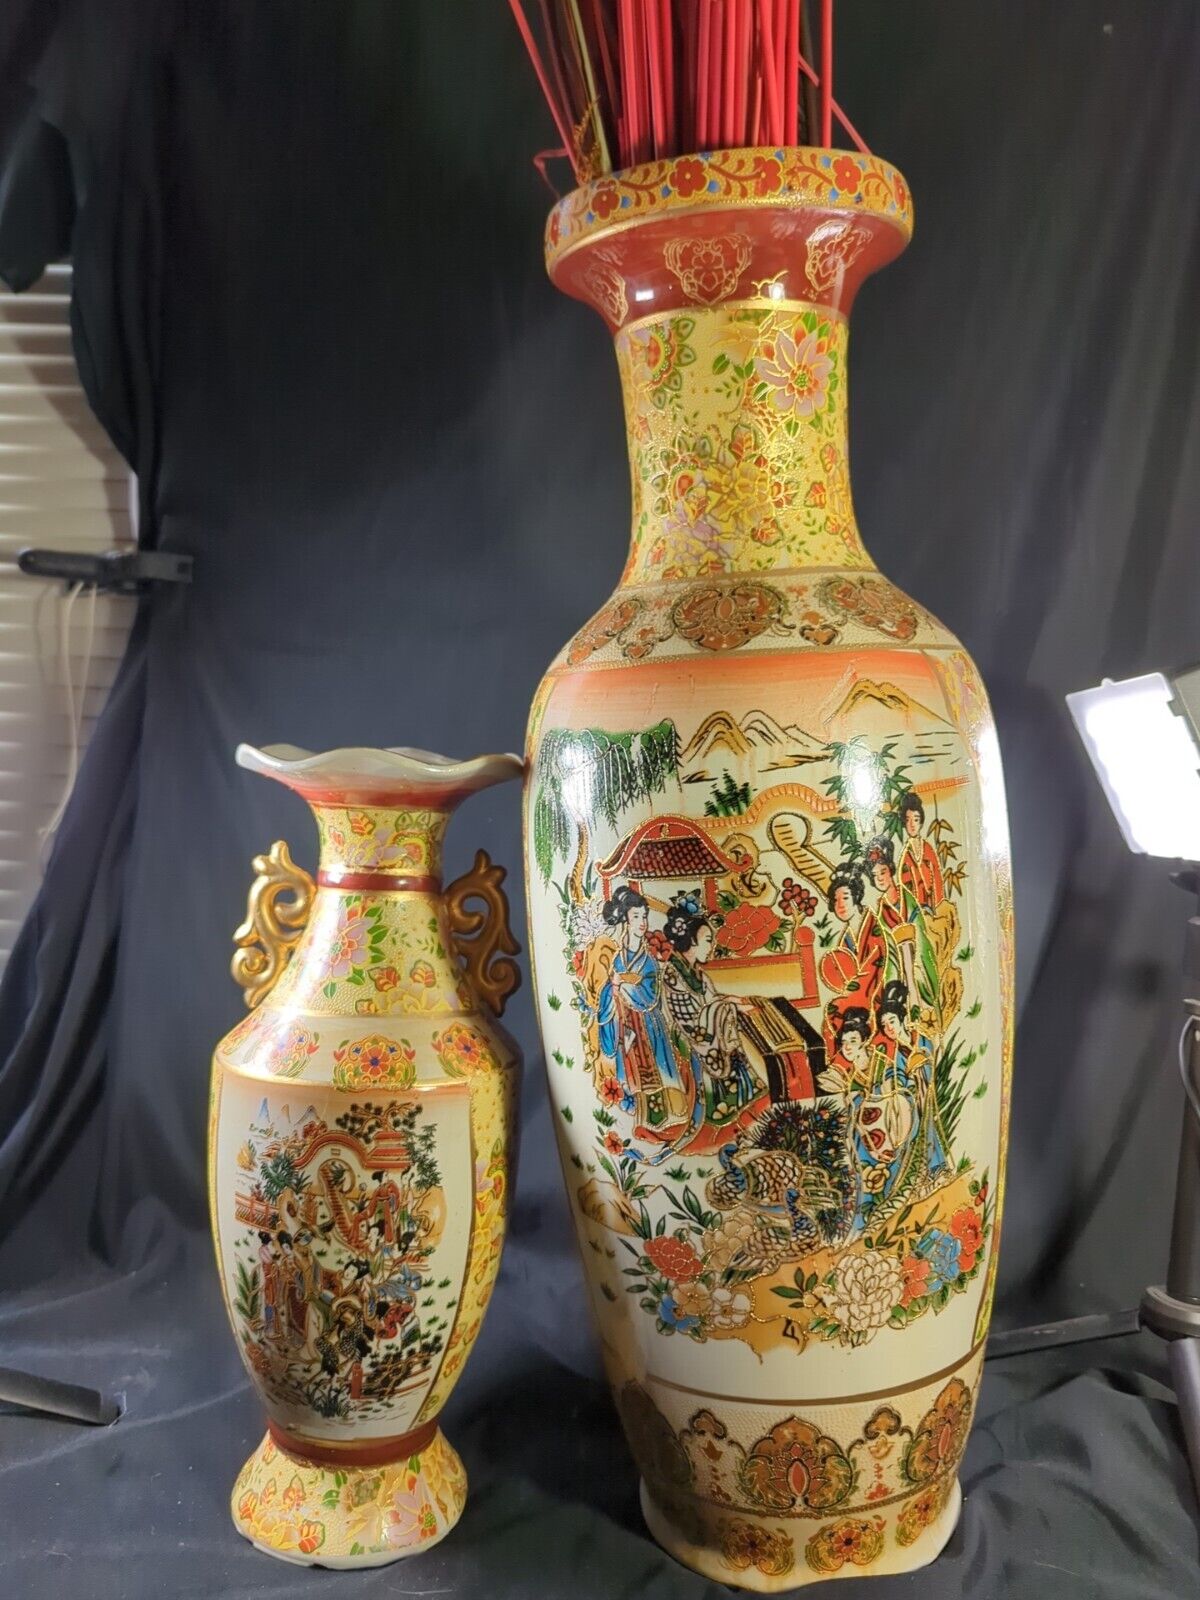 Set 2 Matching Japanese Porcelain Vases Satsuma Style with Textured Design  Vtg